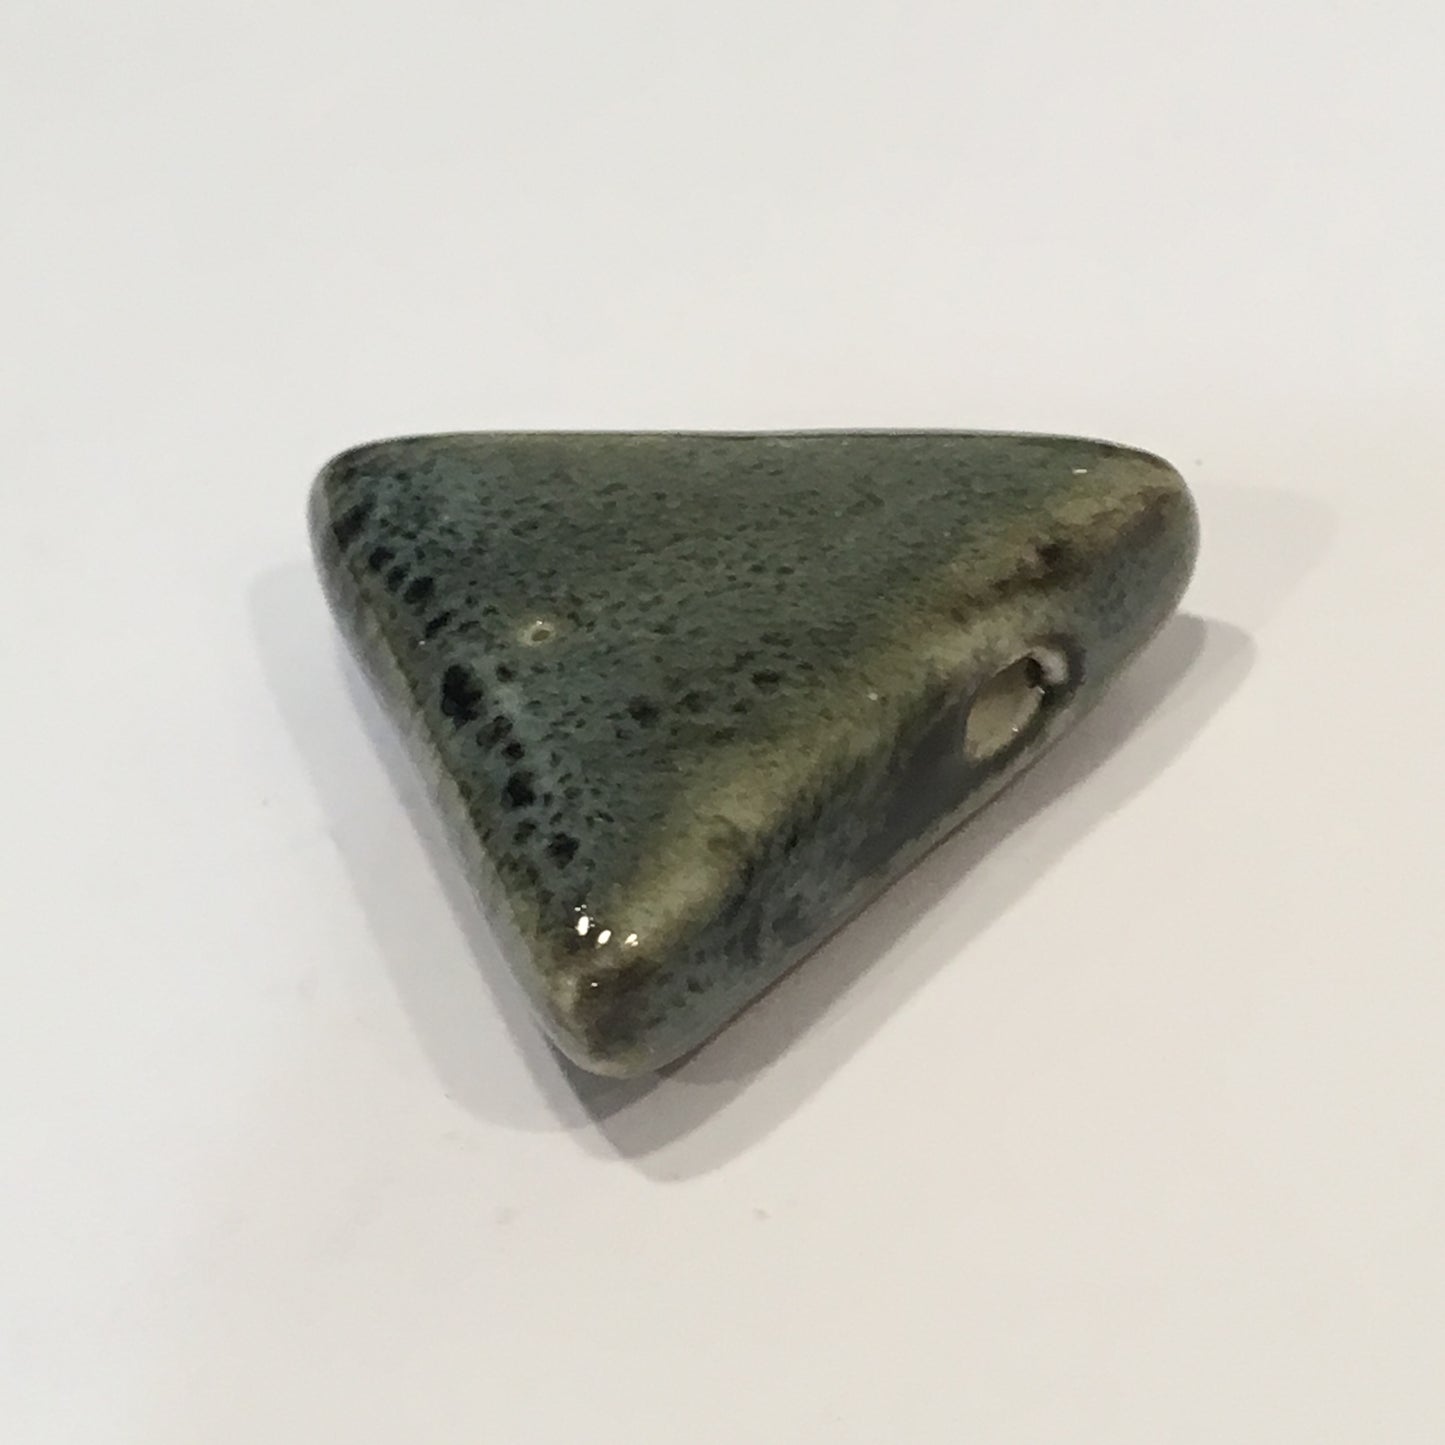 Slate Gray Ceramic Triangle Pendant, 26 x 9.5 mm